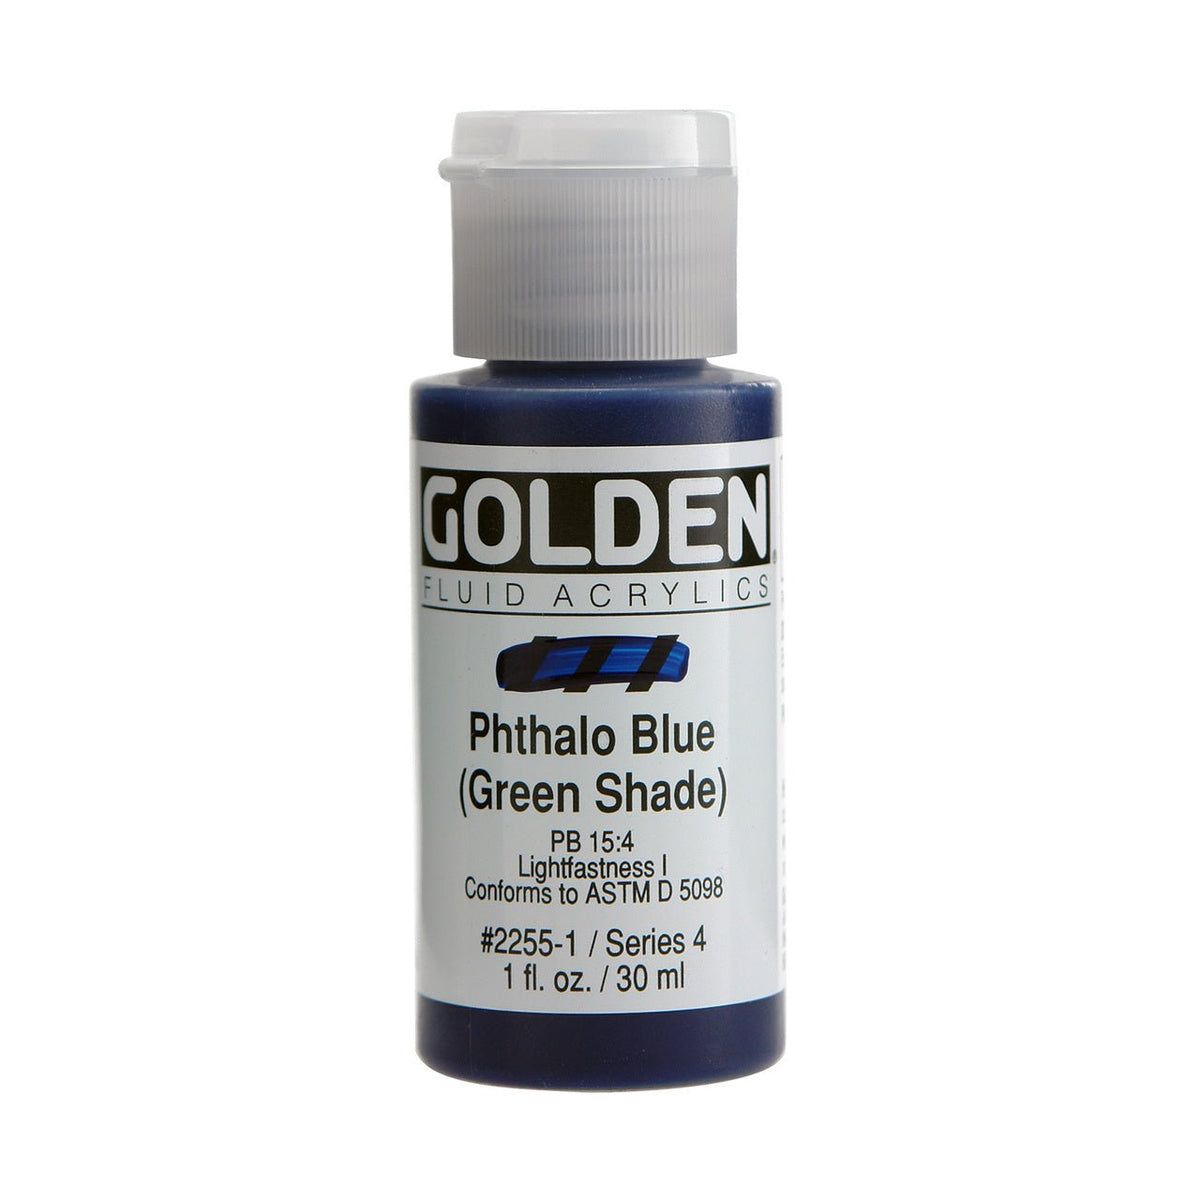 Golden Fluid Acrylic Phthalo Blue (green Shade) 1 oz - merriartist.com